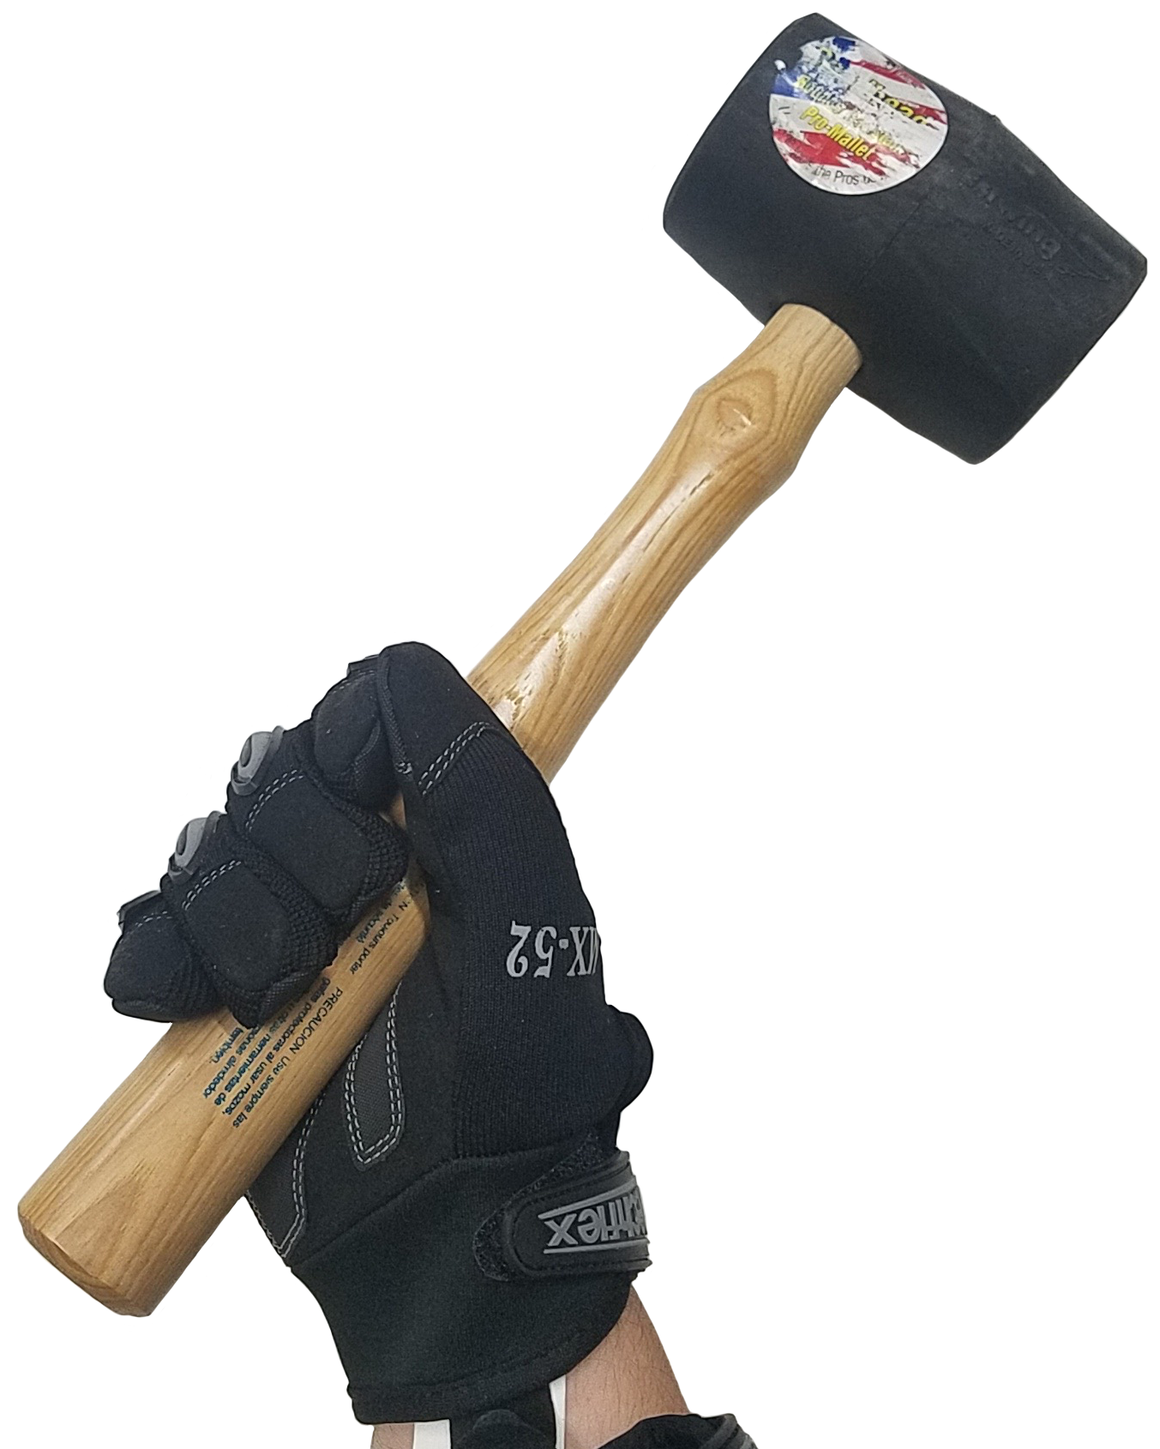 https://ia.legionsafety.com/4UWVpNSoqKgqcOvfS3GPs0MqxGIqZgVsLGe7-APV/chicago-protective-apparel-mechflex-mx-52-mechanics-gloves-hammer-1160x1449.png